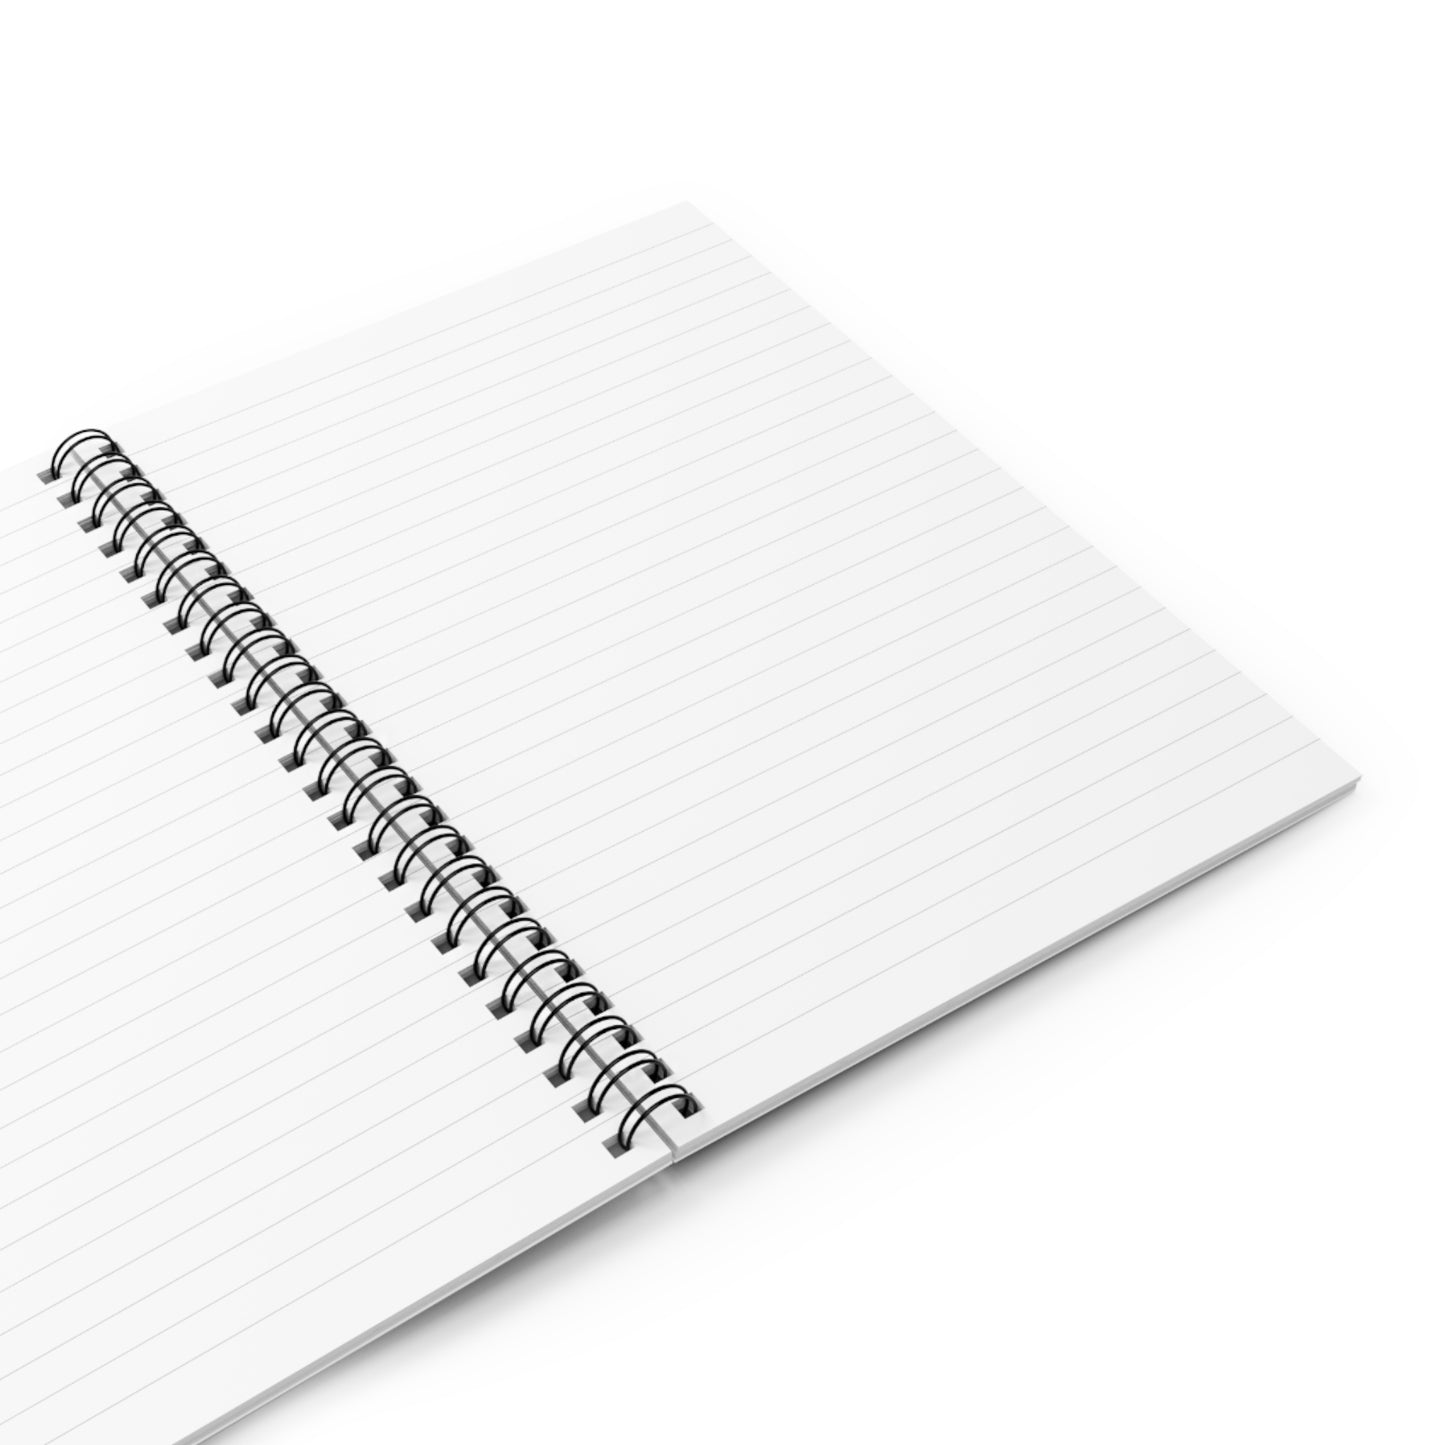 Pencil Glitter Spiral Notebook - Ruled Line